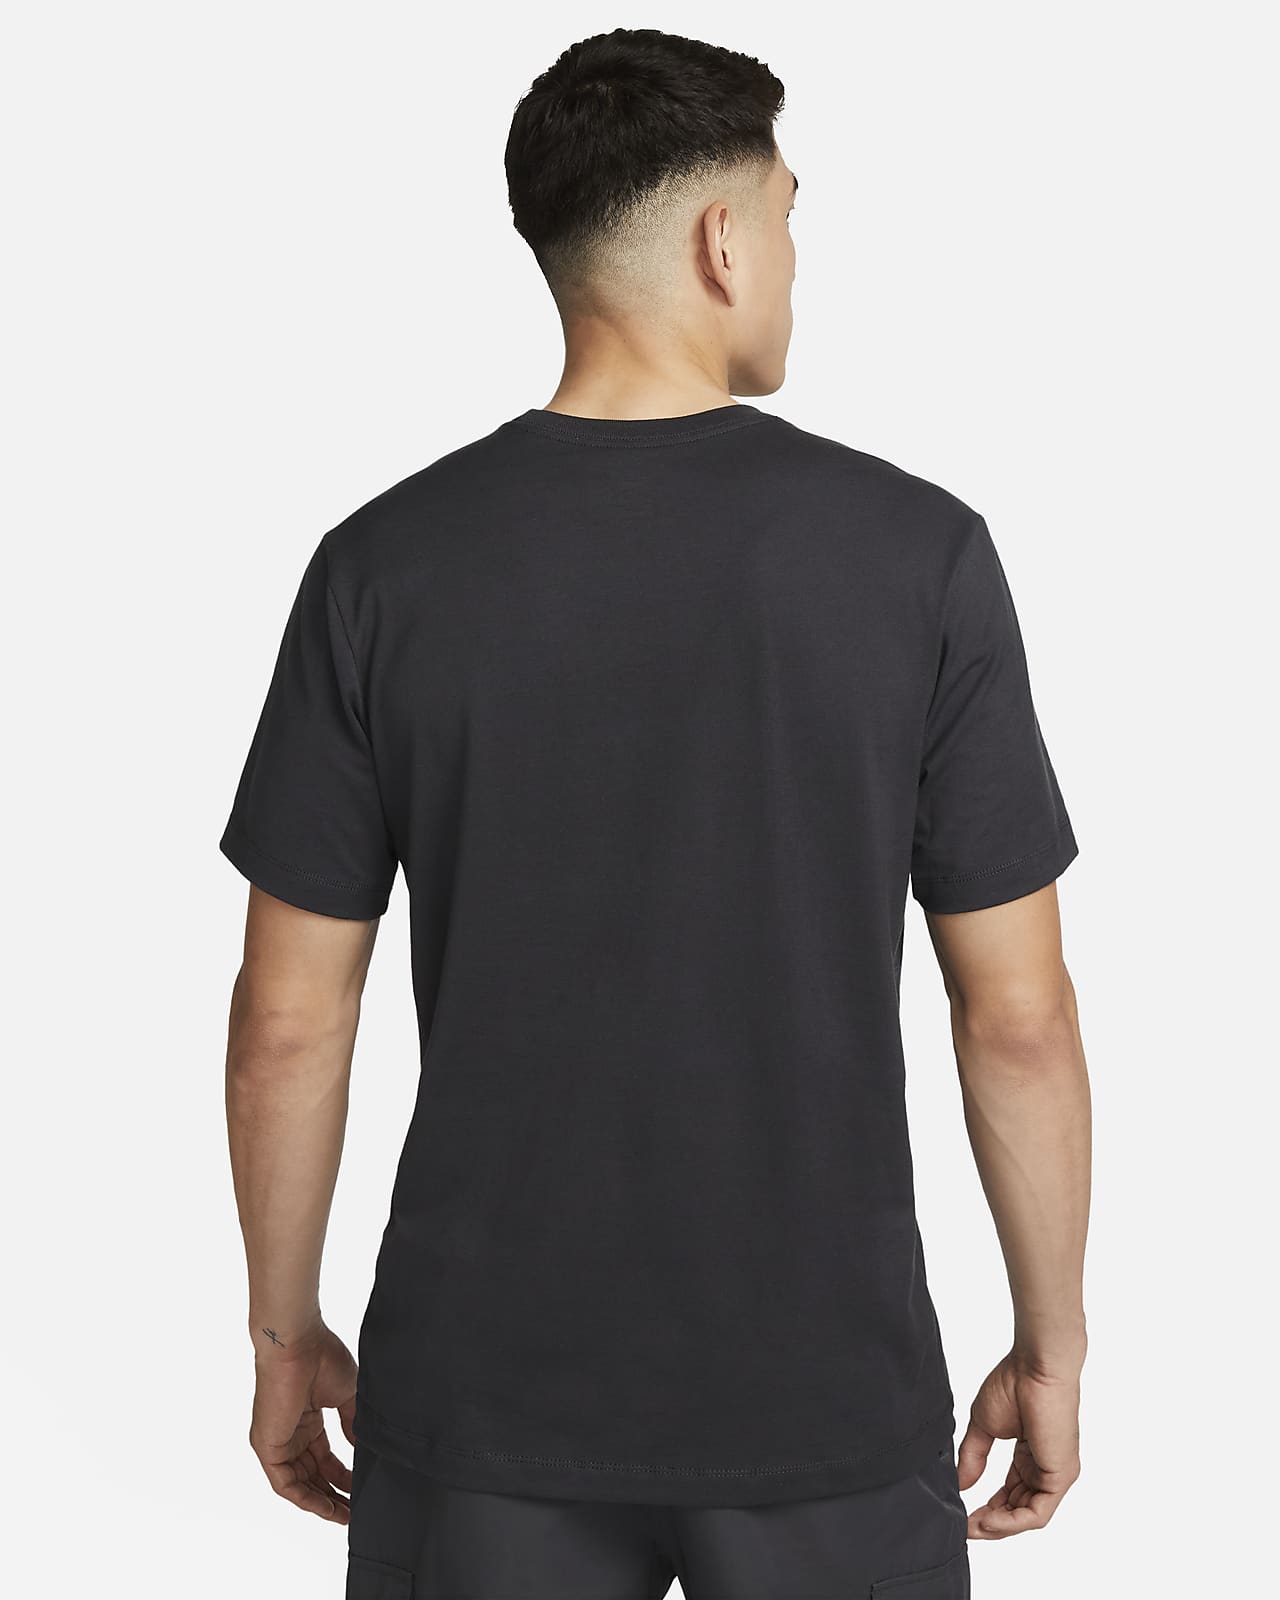 Nike NYC City t-shirt in black